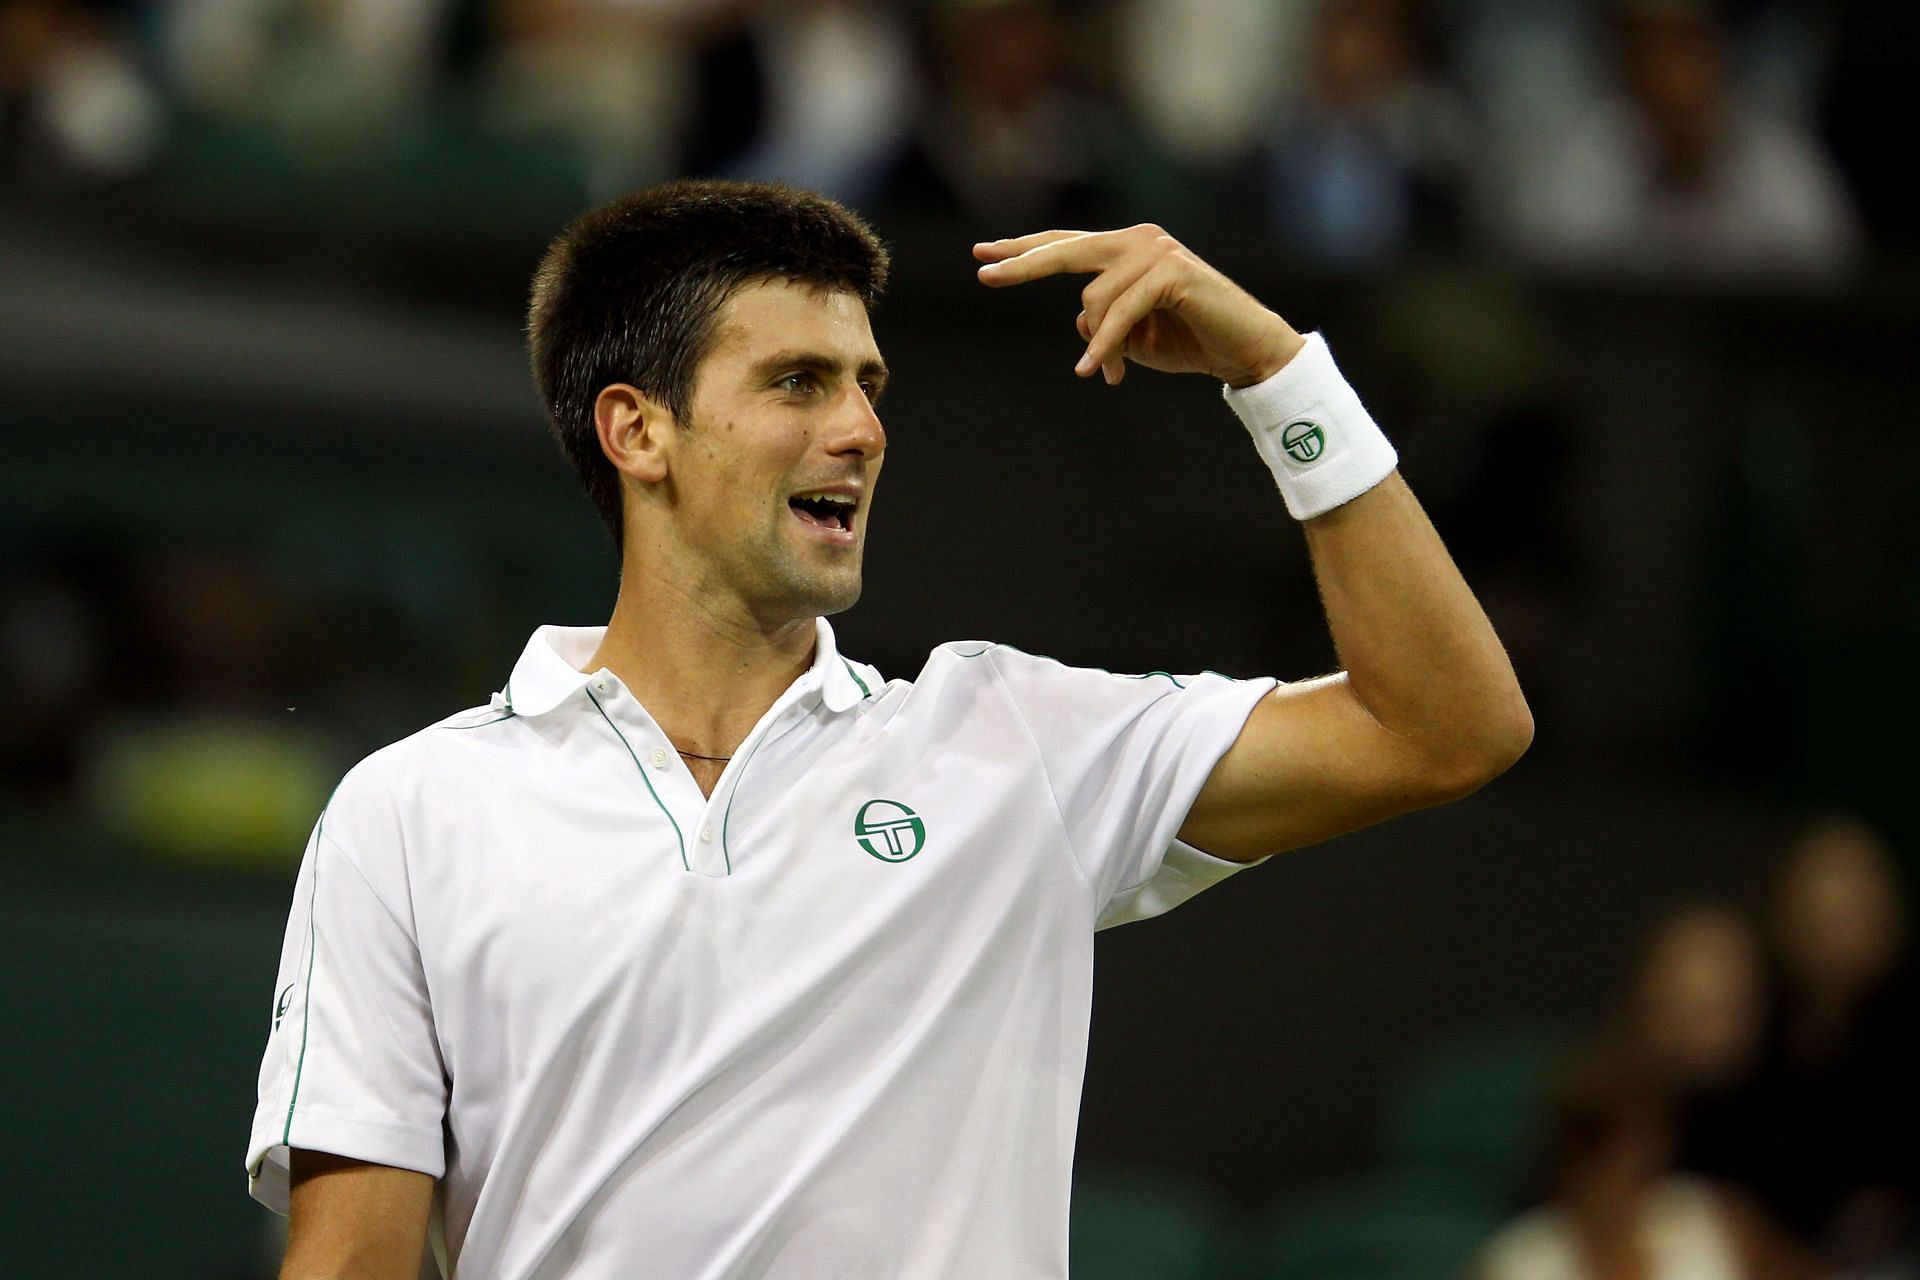 The Championships - Wimbledon - All England Club: Novak Djokovic